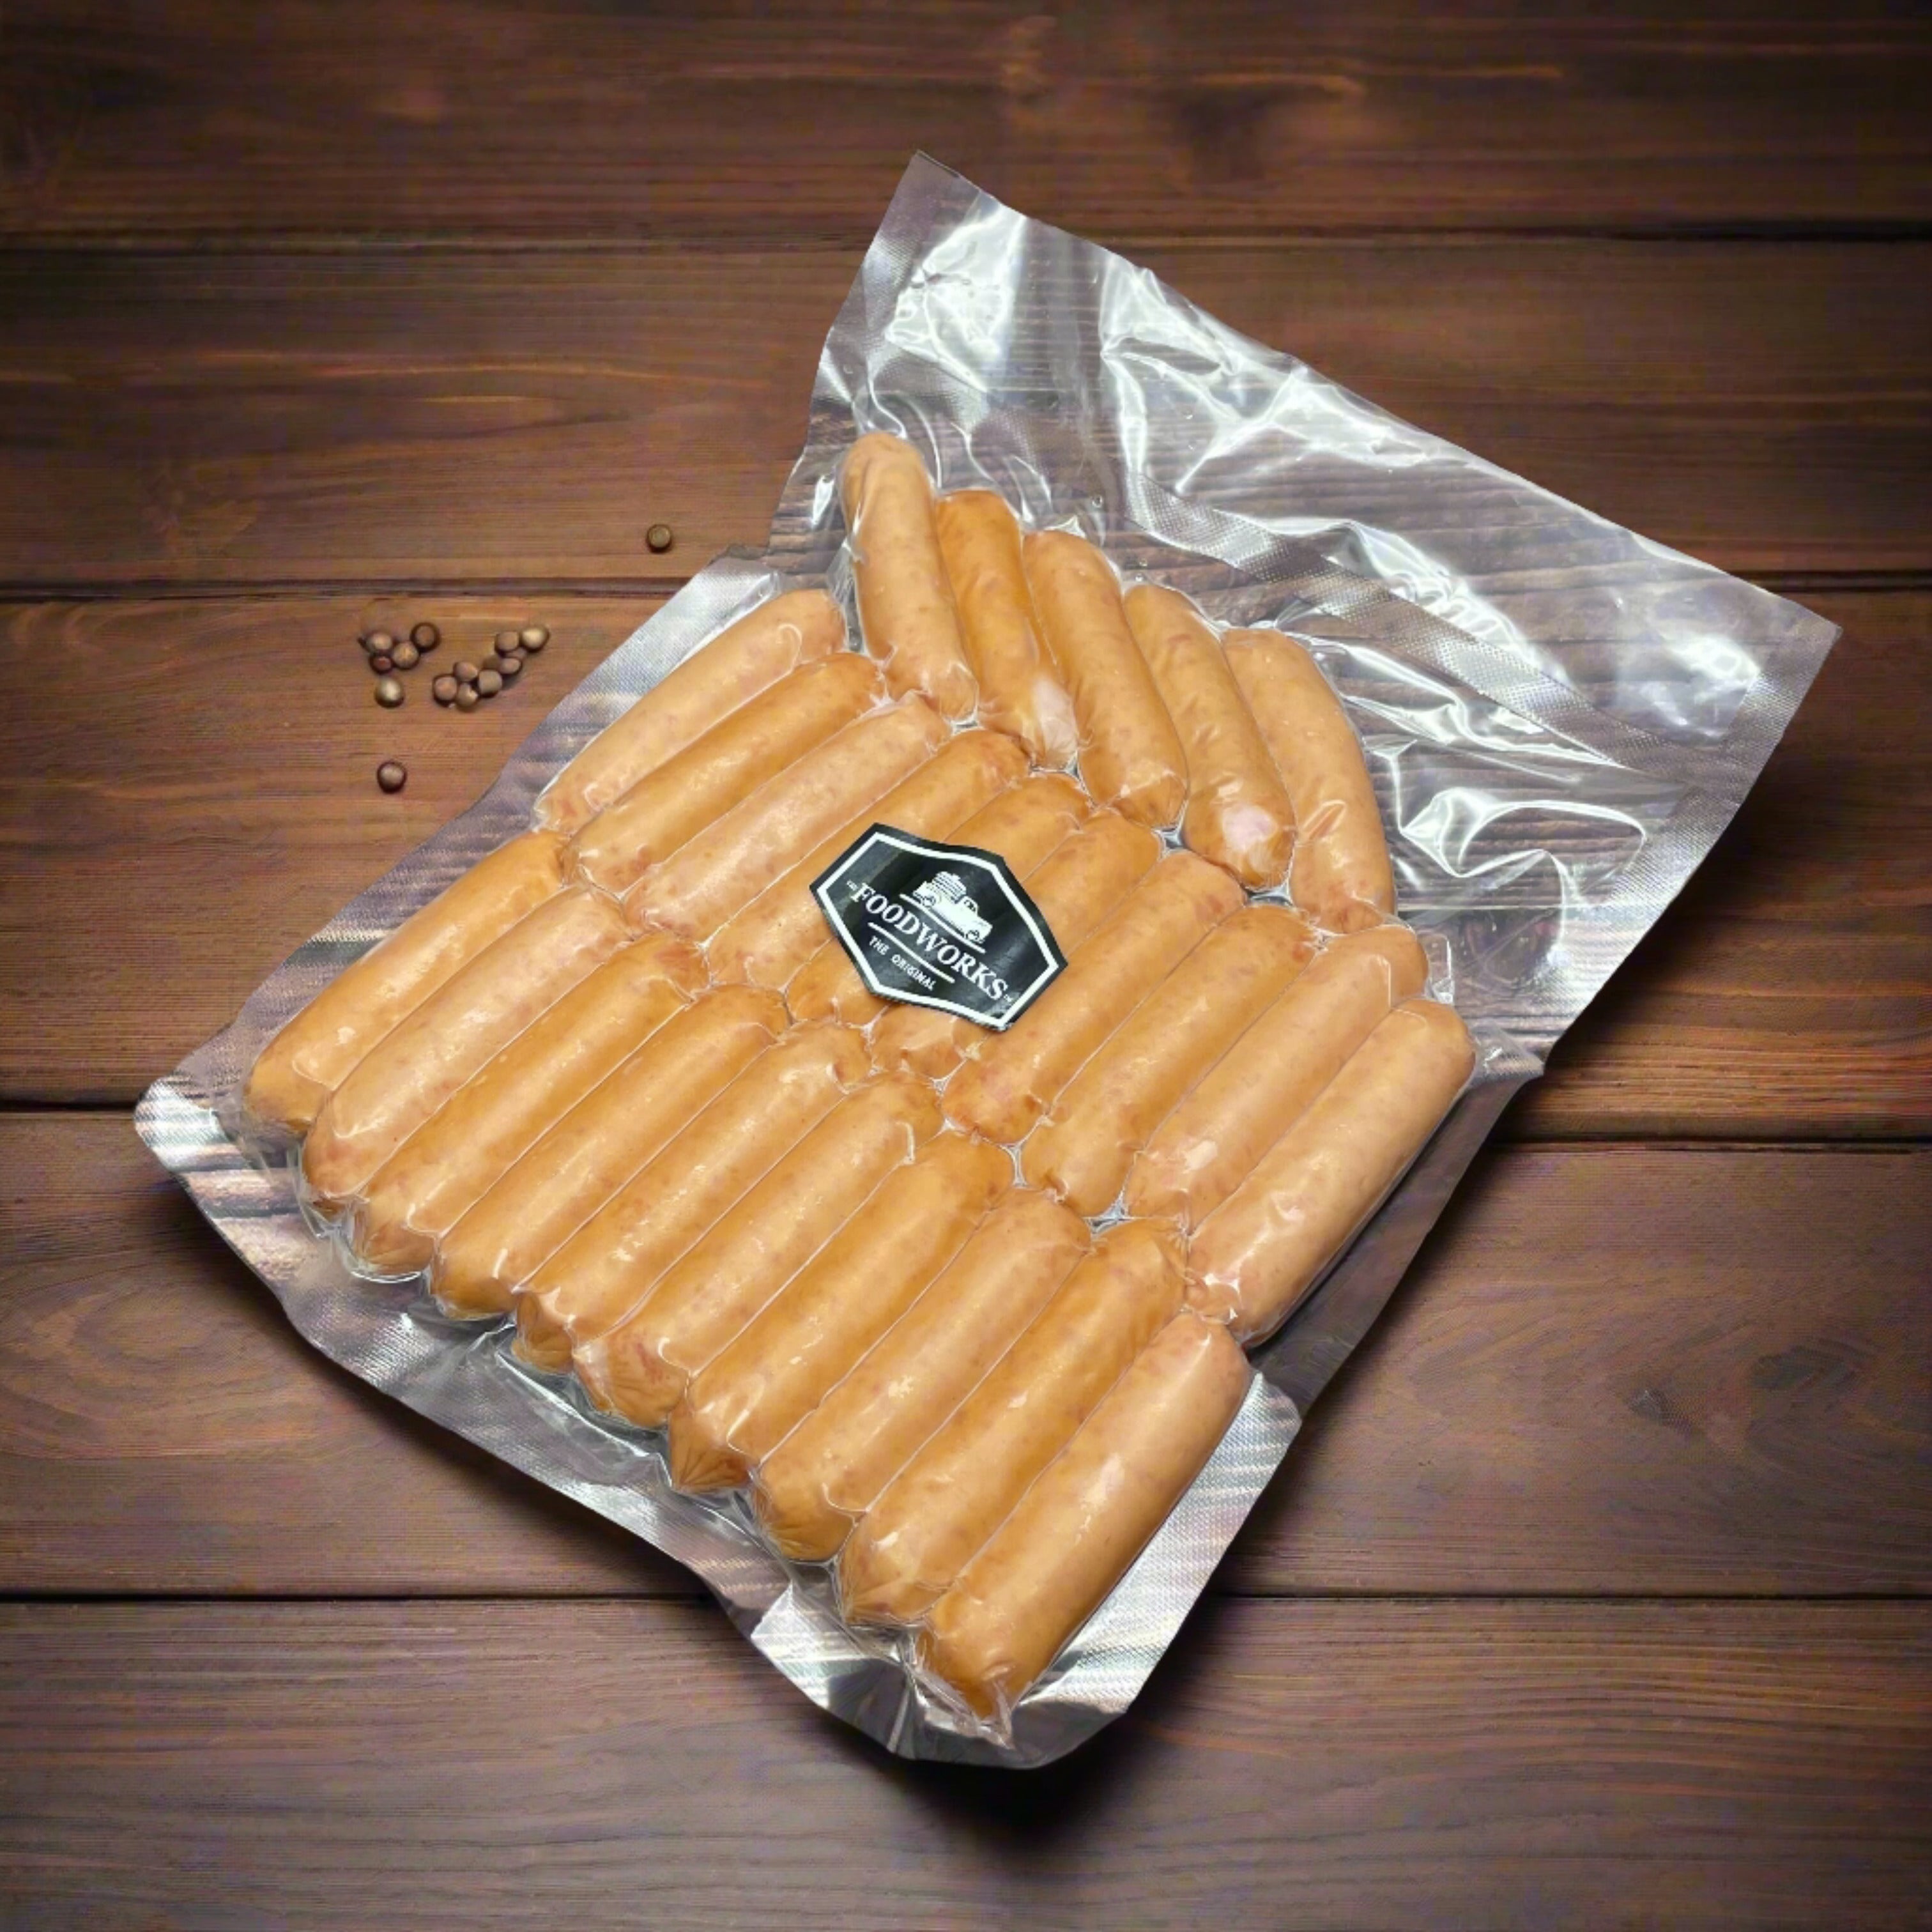 Arabiki Japanese Pork Cheese Sausage ไส้กรอกหมูญี่ปุ่น อาราบิกิ ชีส 500g/pack (25pcs/pack) Size 2.5" (S)